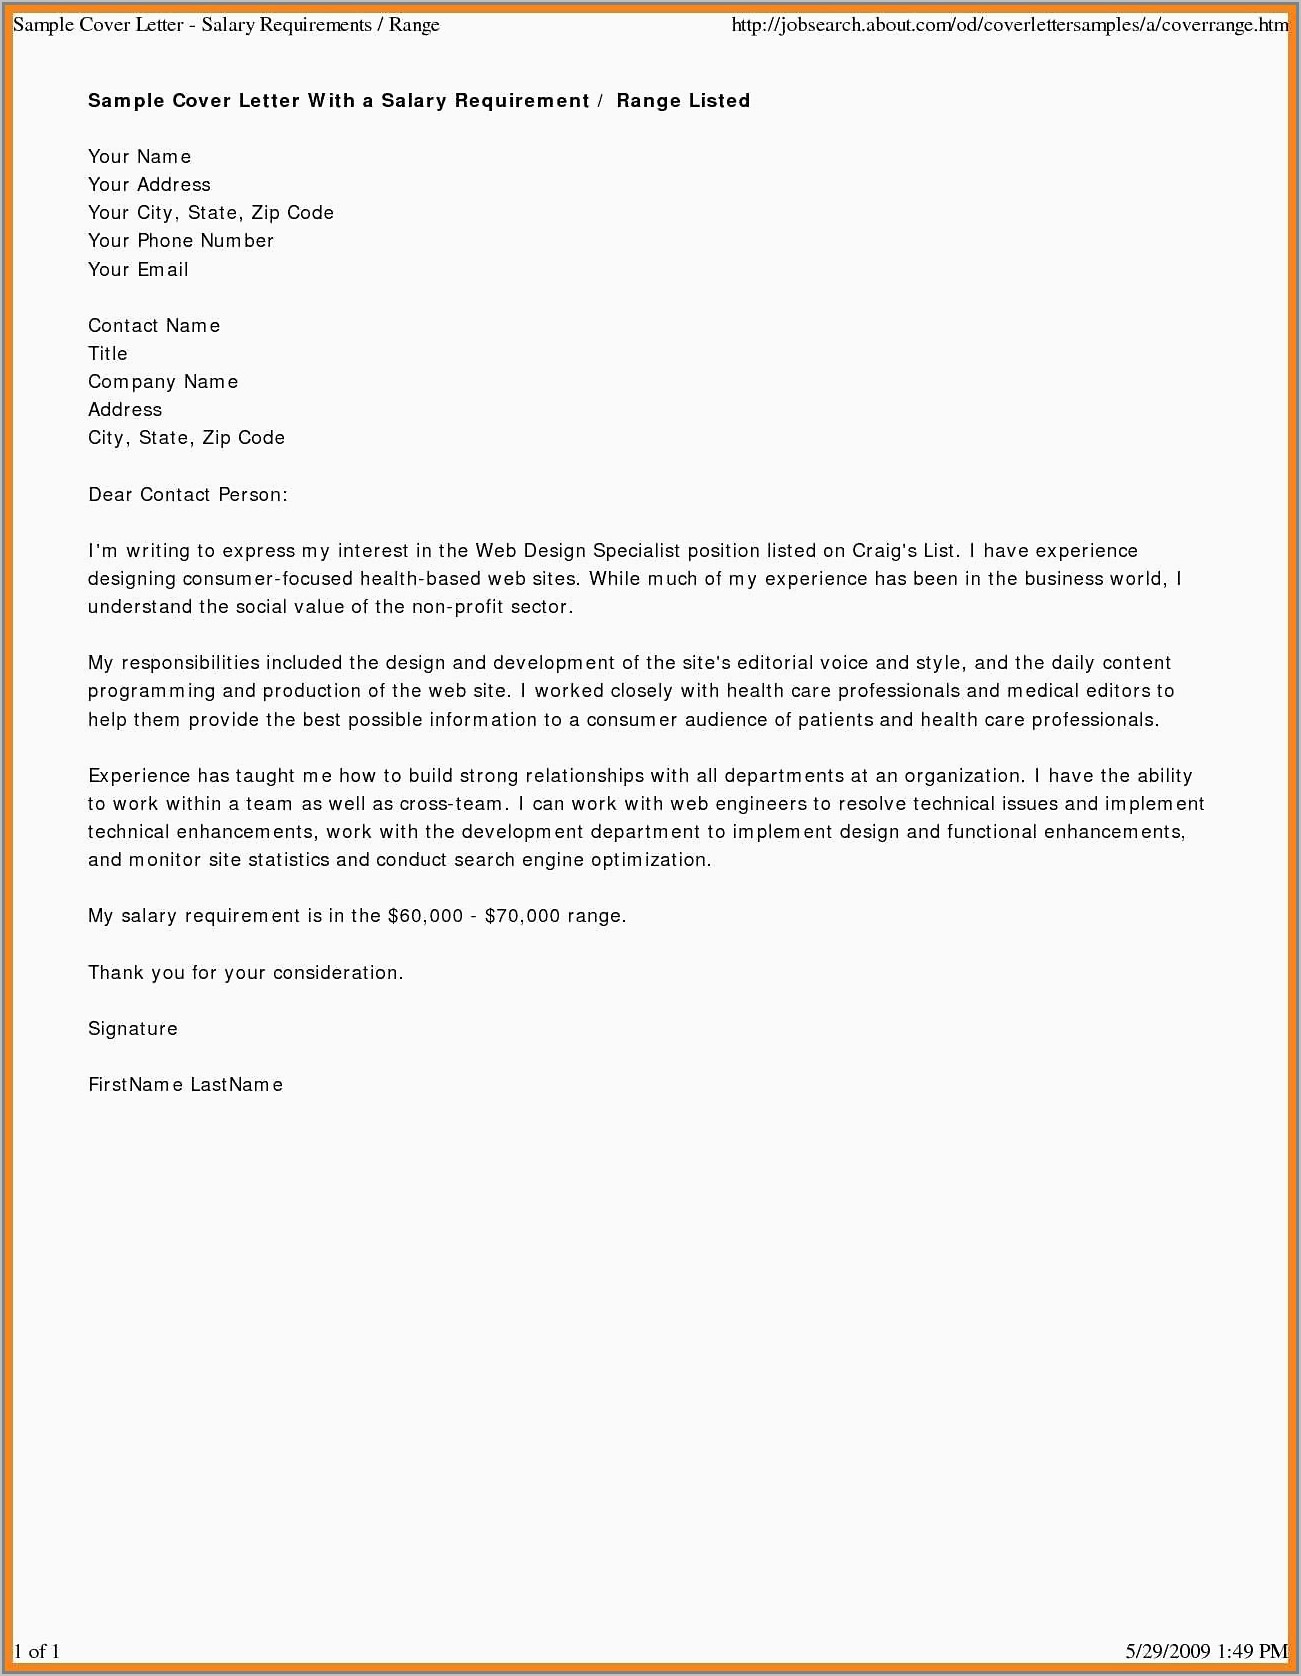 Sample Cv Cover Letter For Lawyer